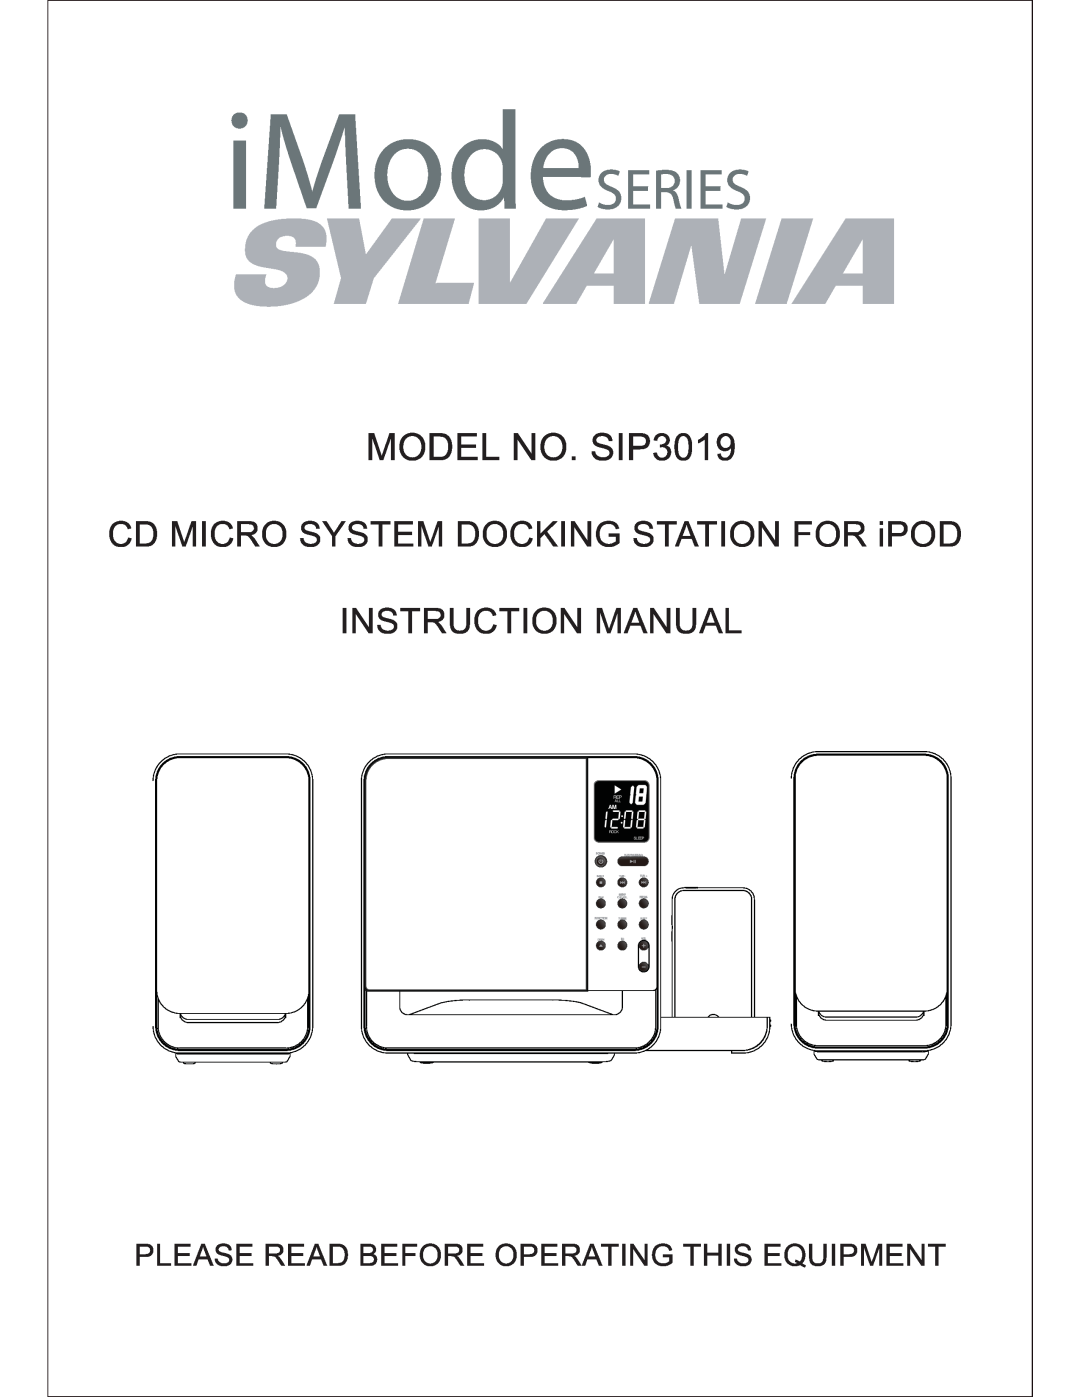 Sylvania instruction manual iModeSERIES, MODEL NO. SIP3019, CD MICRO SYSTEM DOCKING STATION FOR iPOD, Rock, Sleep 